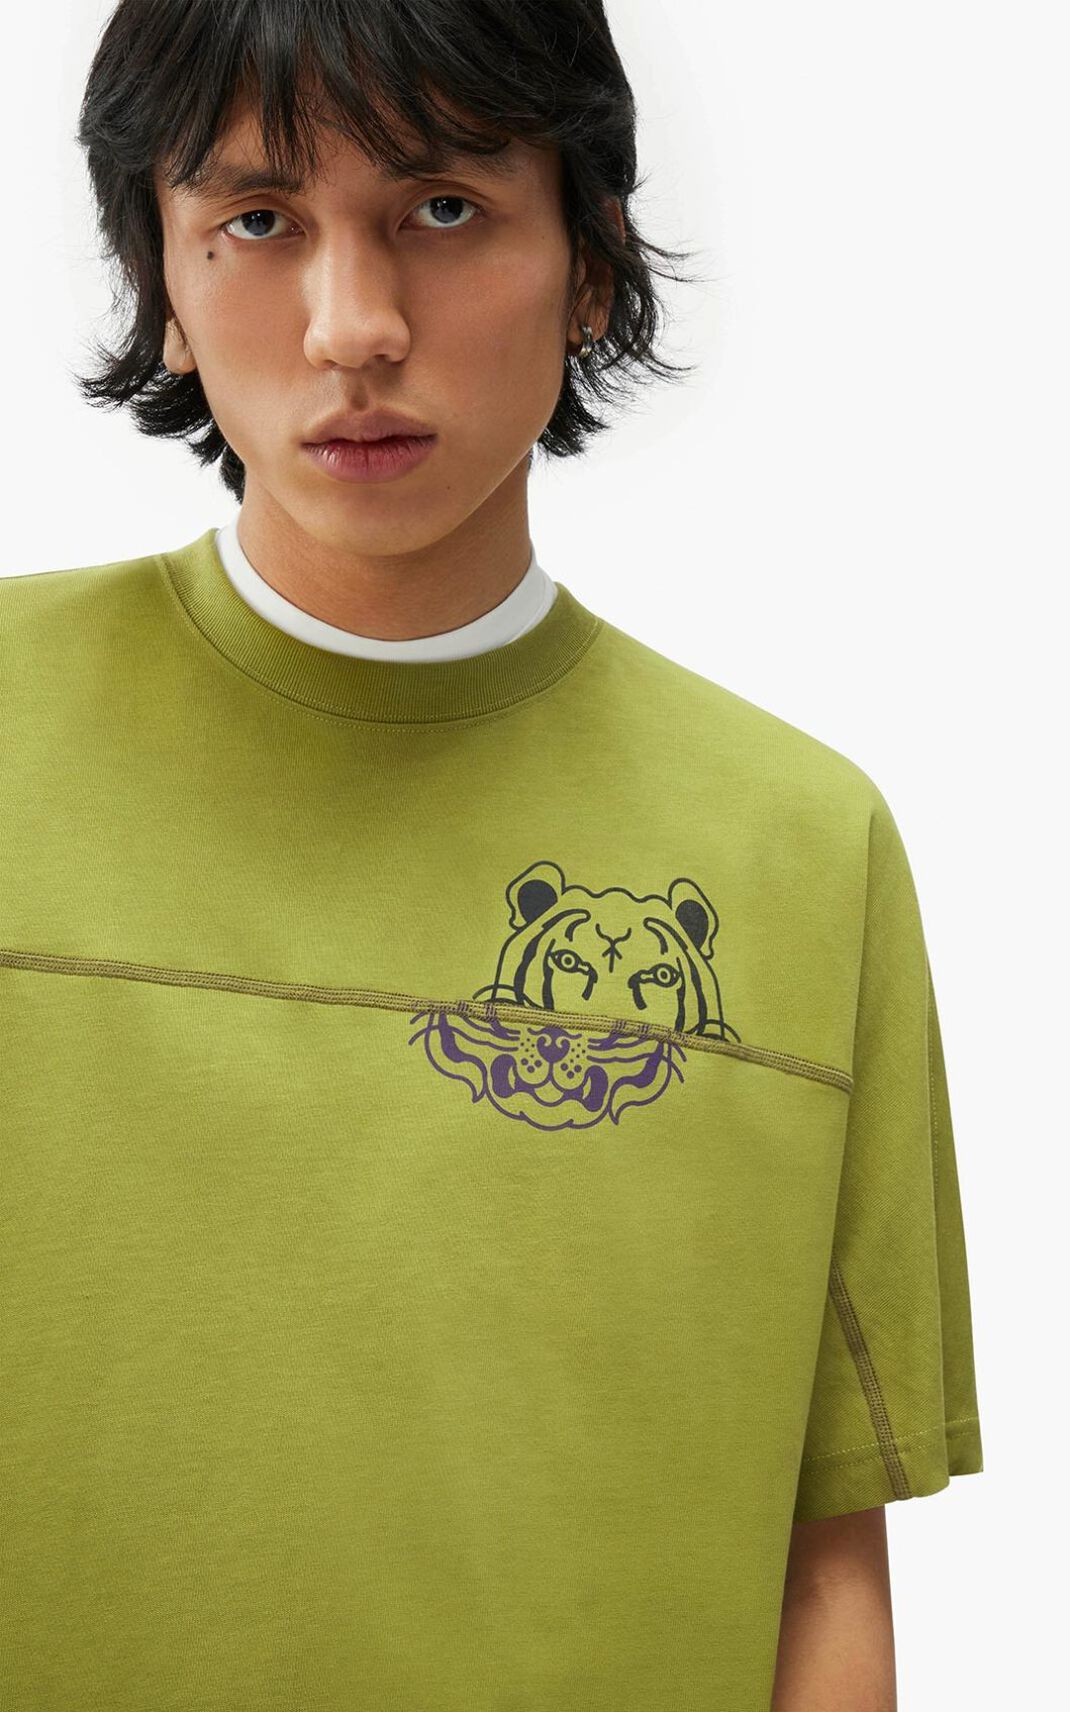 Camiseta Kenzo K Tiger oversized Masculino - Verde Oliva | 195HEJBVI